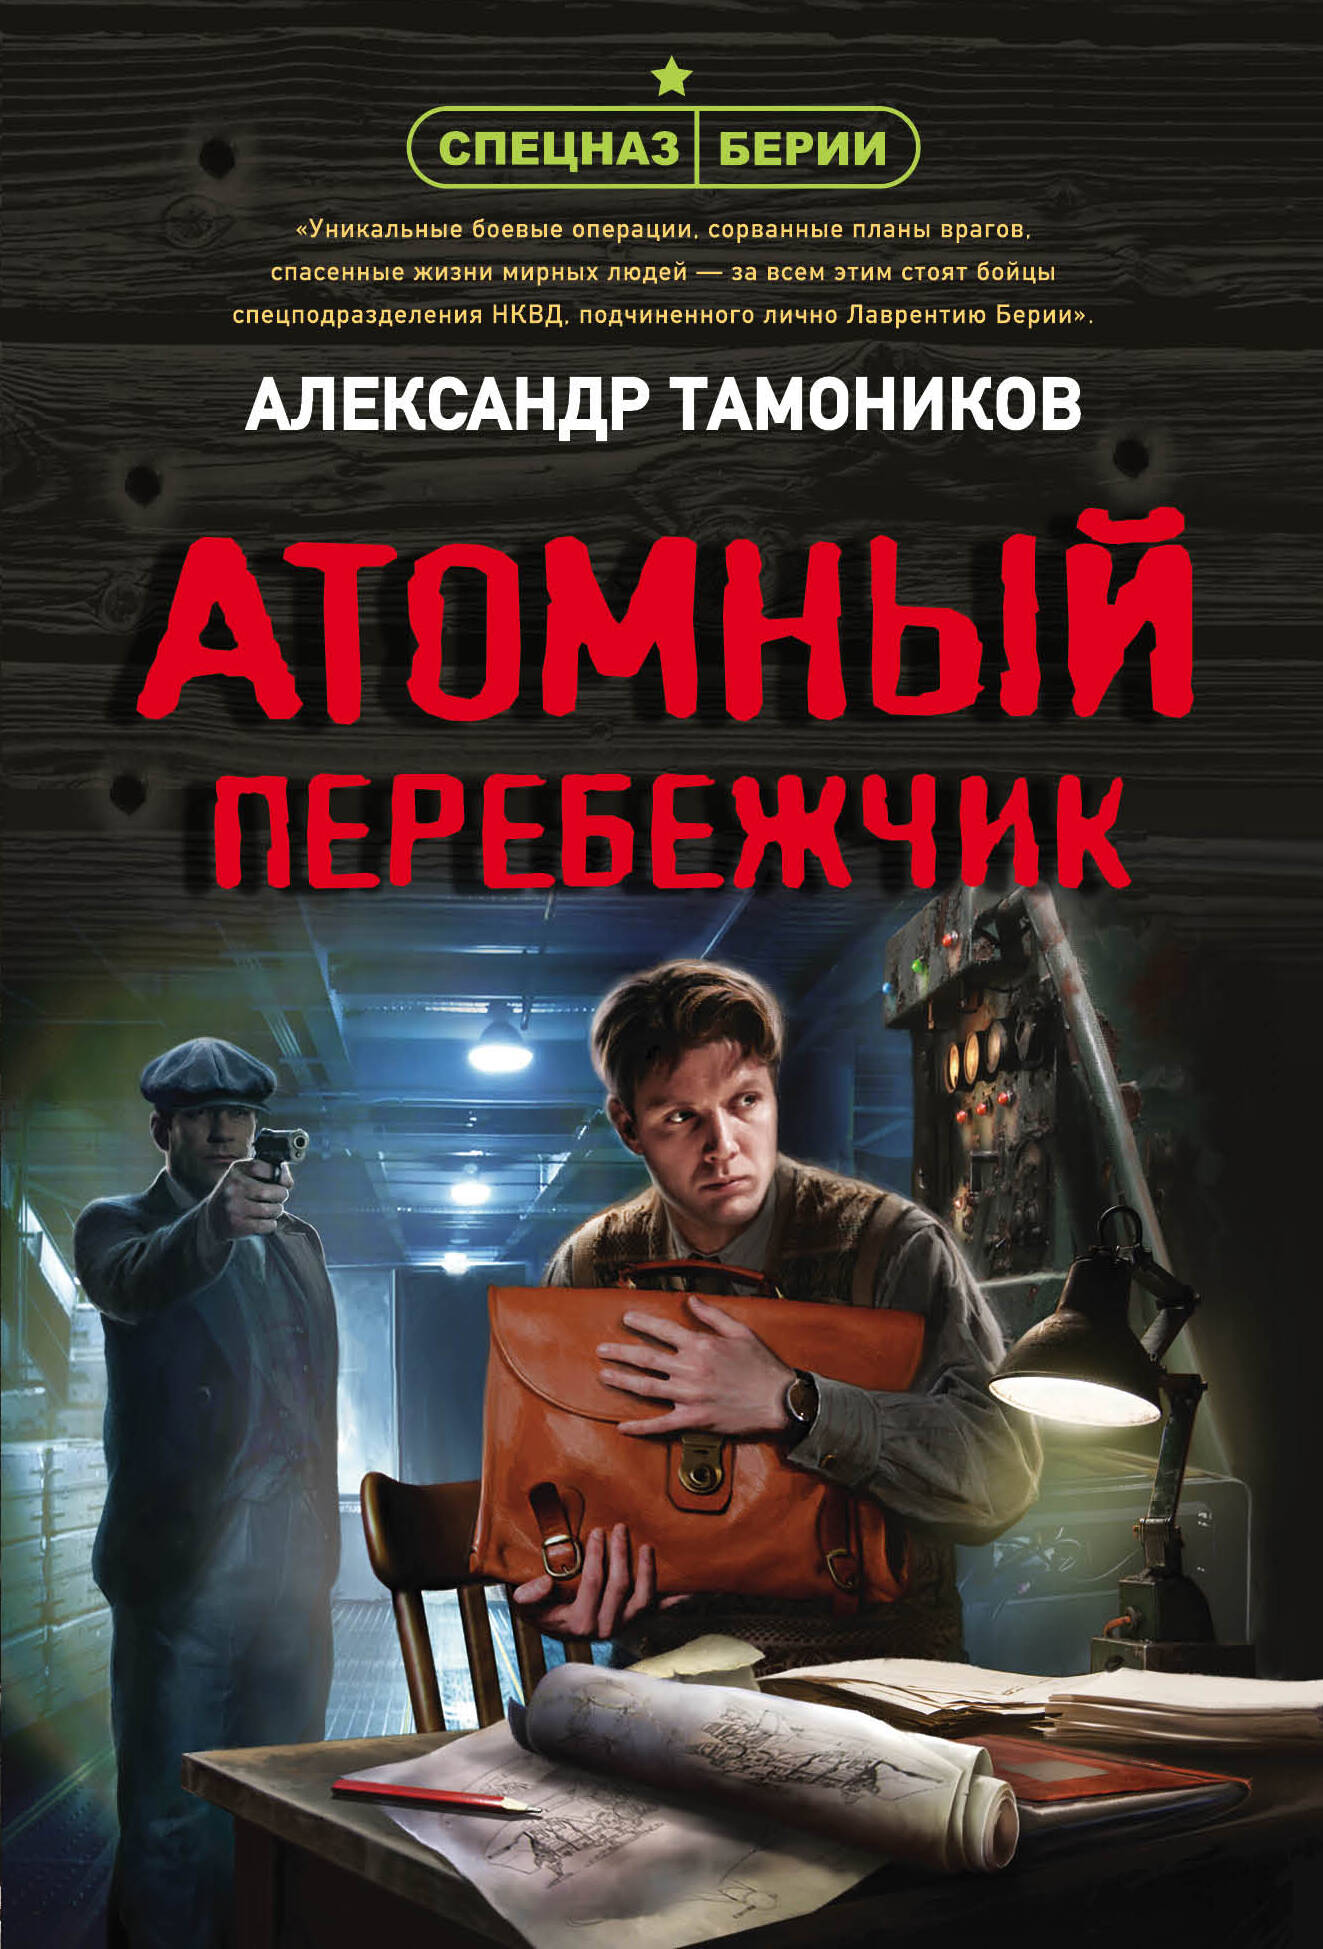 Тамоников Александр Александрович - Атомный перебежчик